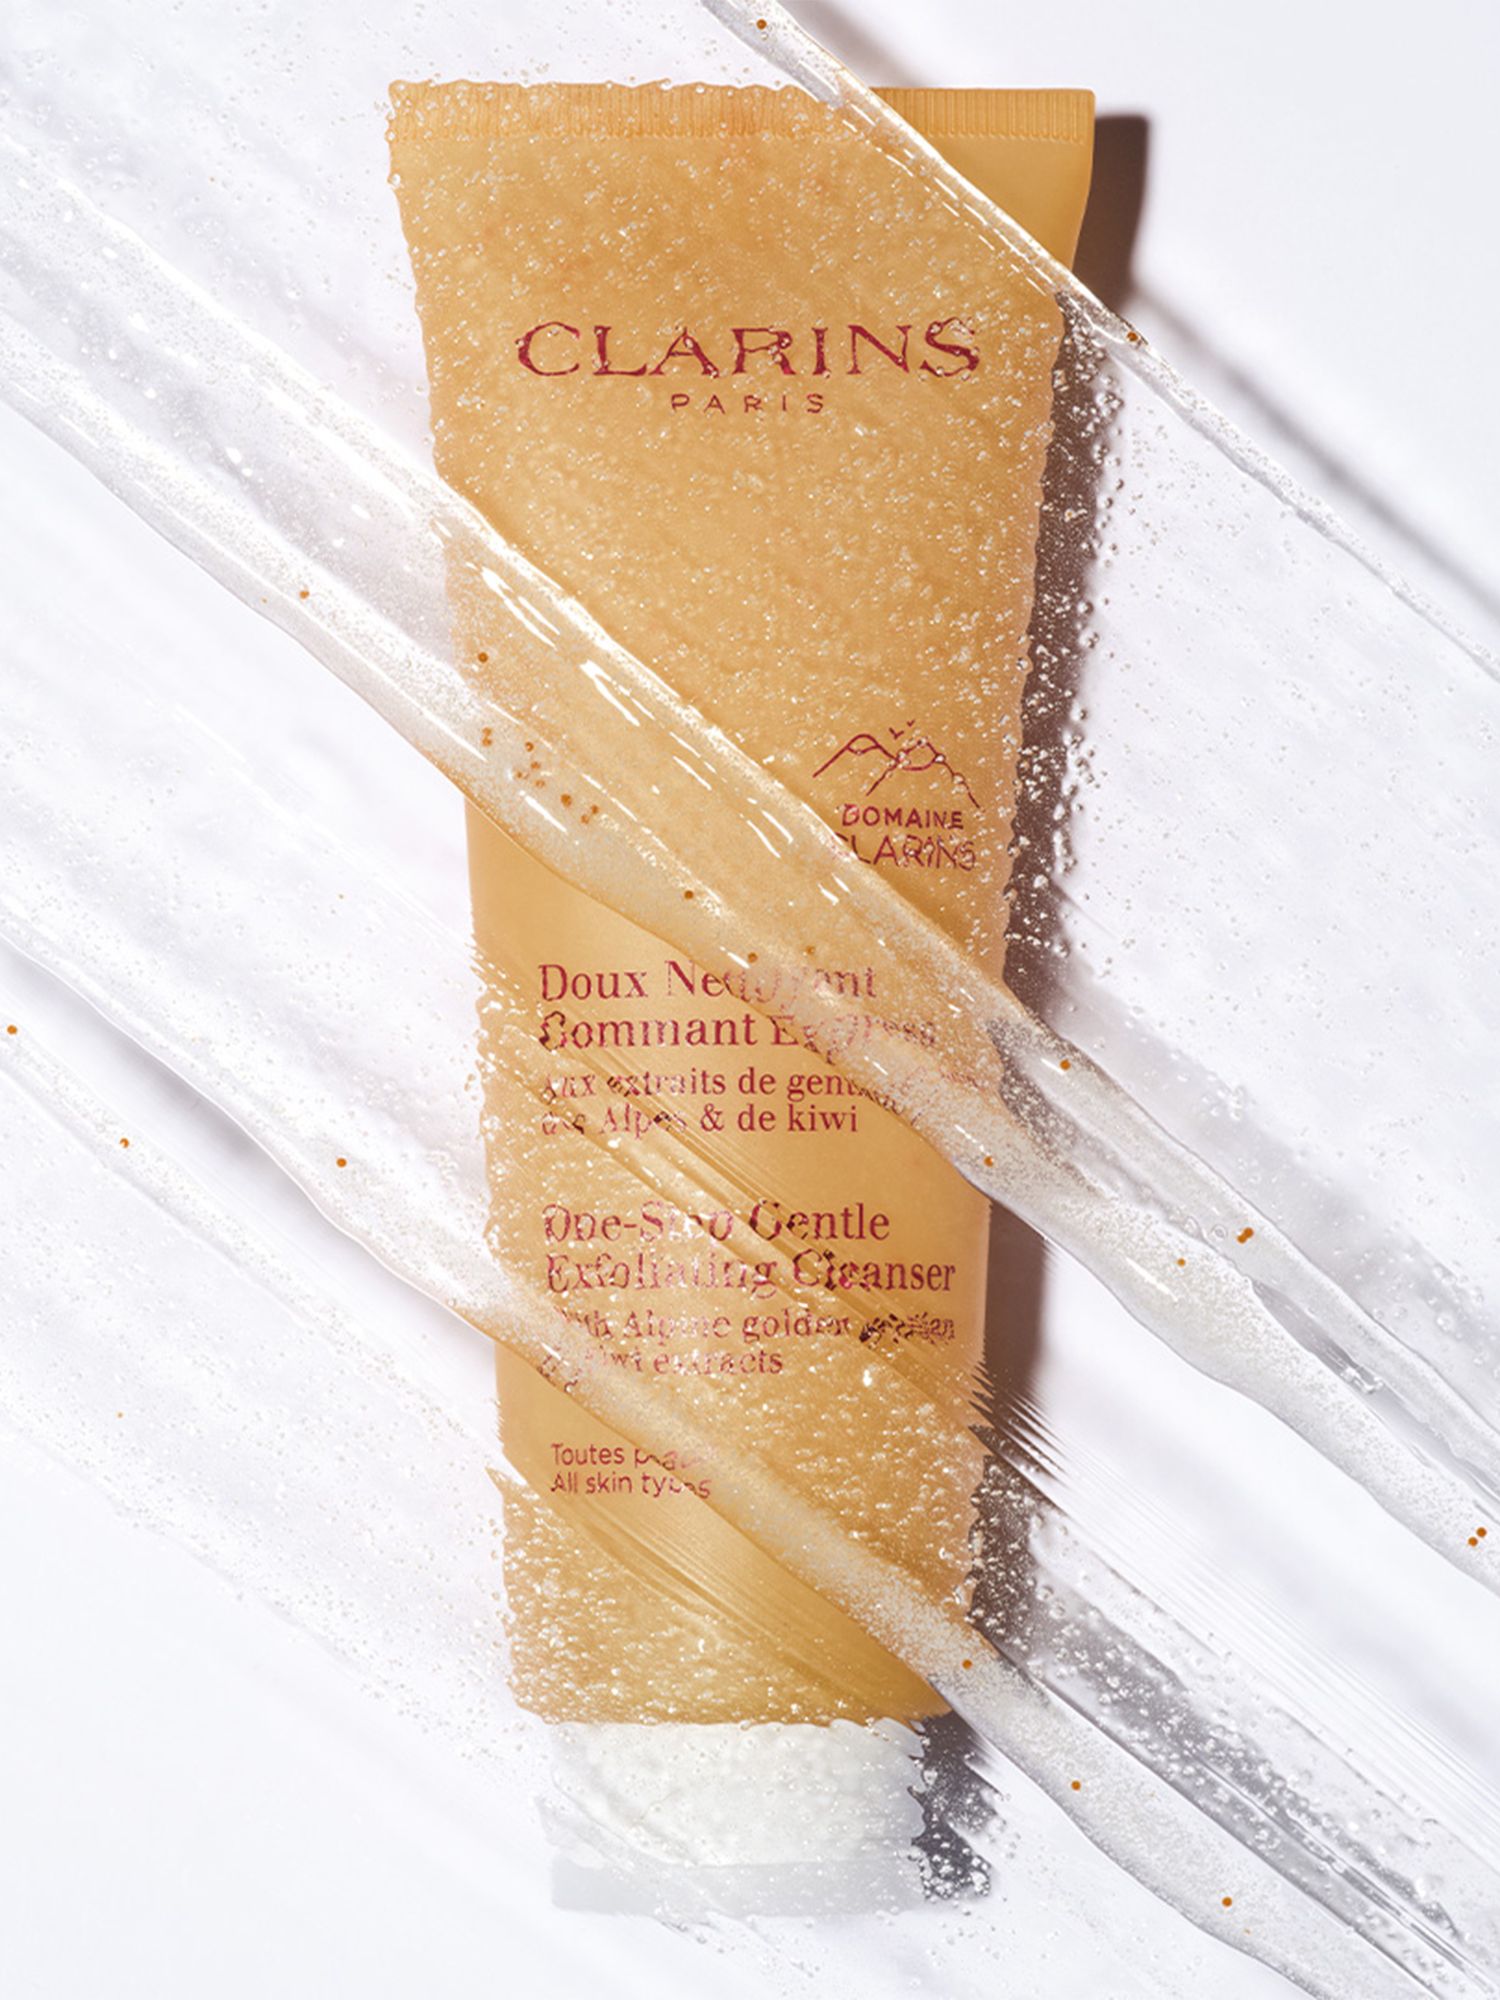 Clarins One-Step Gentle Exfoliating Cleanser, 125ml 3